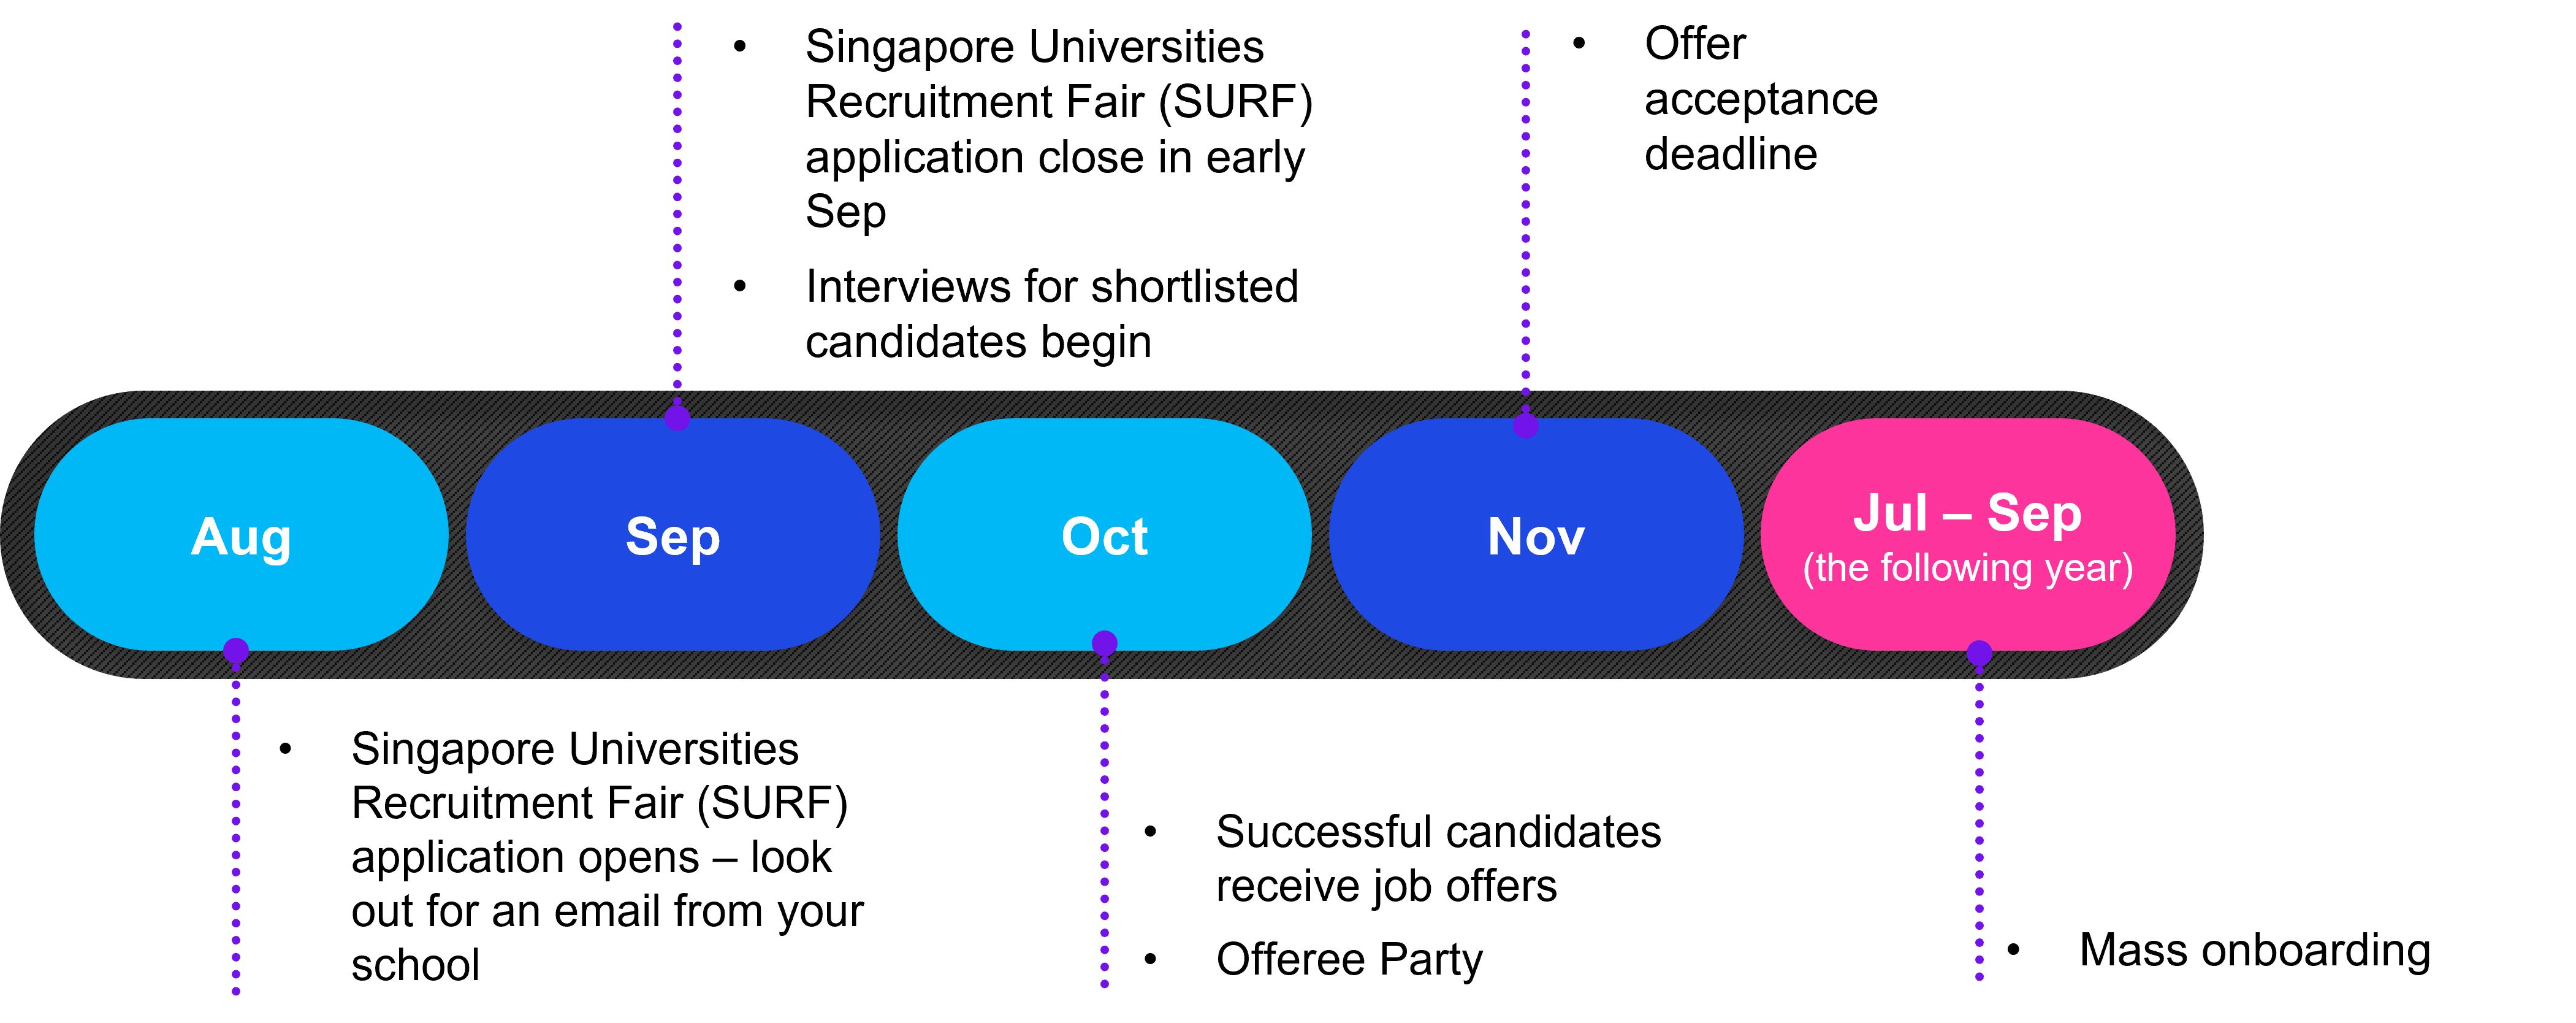 kpmg in singapore application timeline - graduates